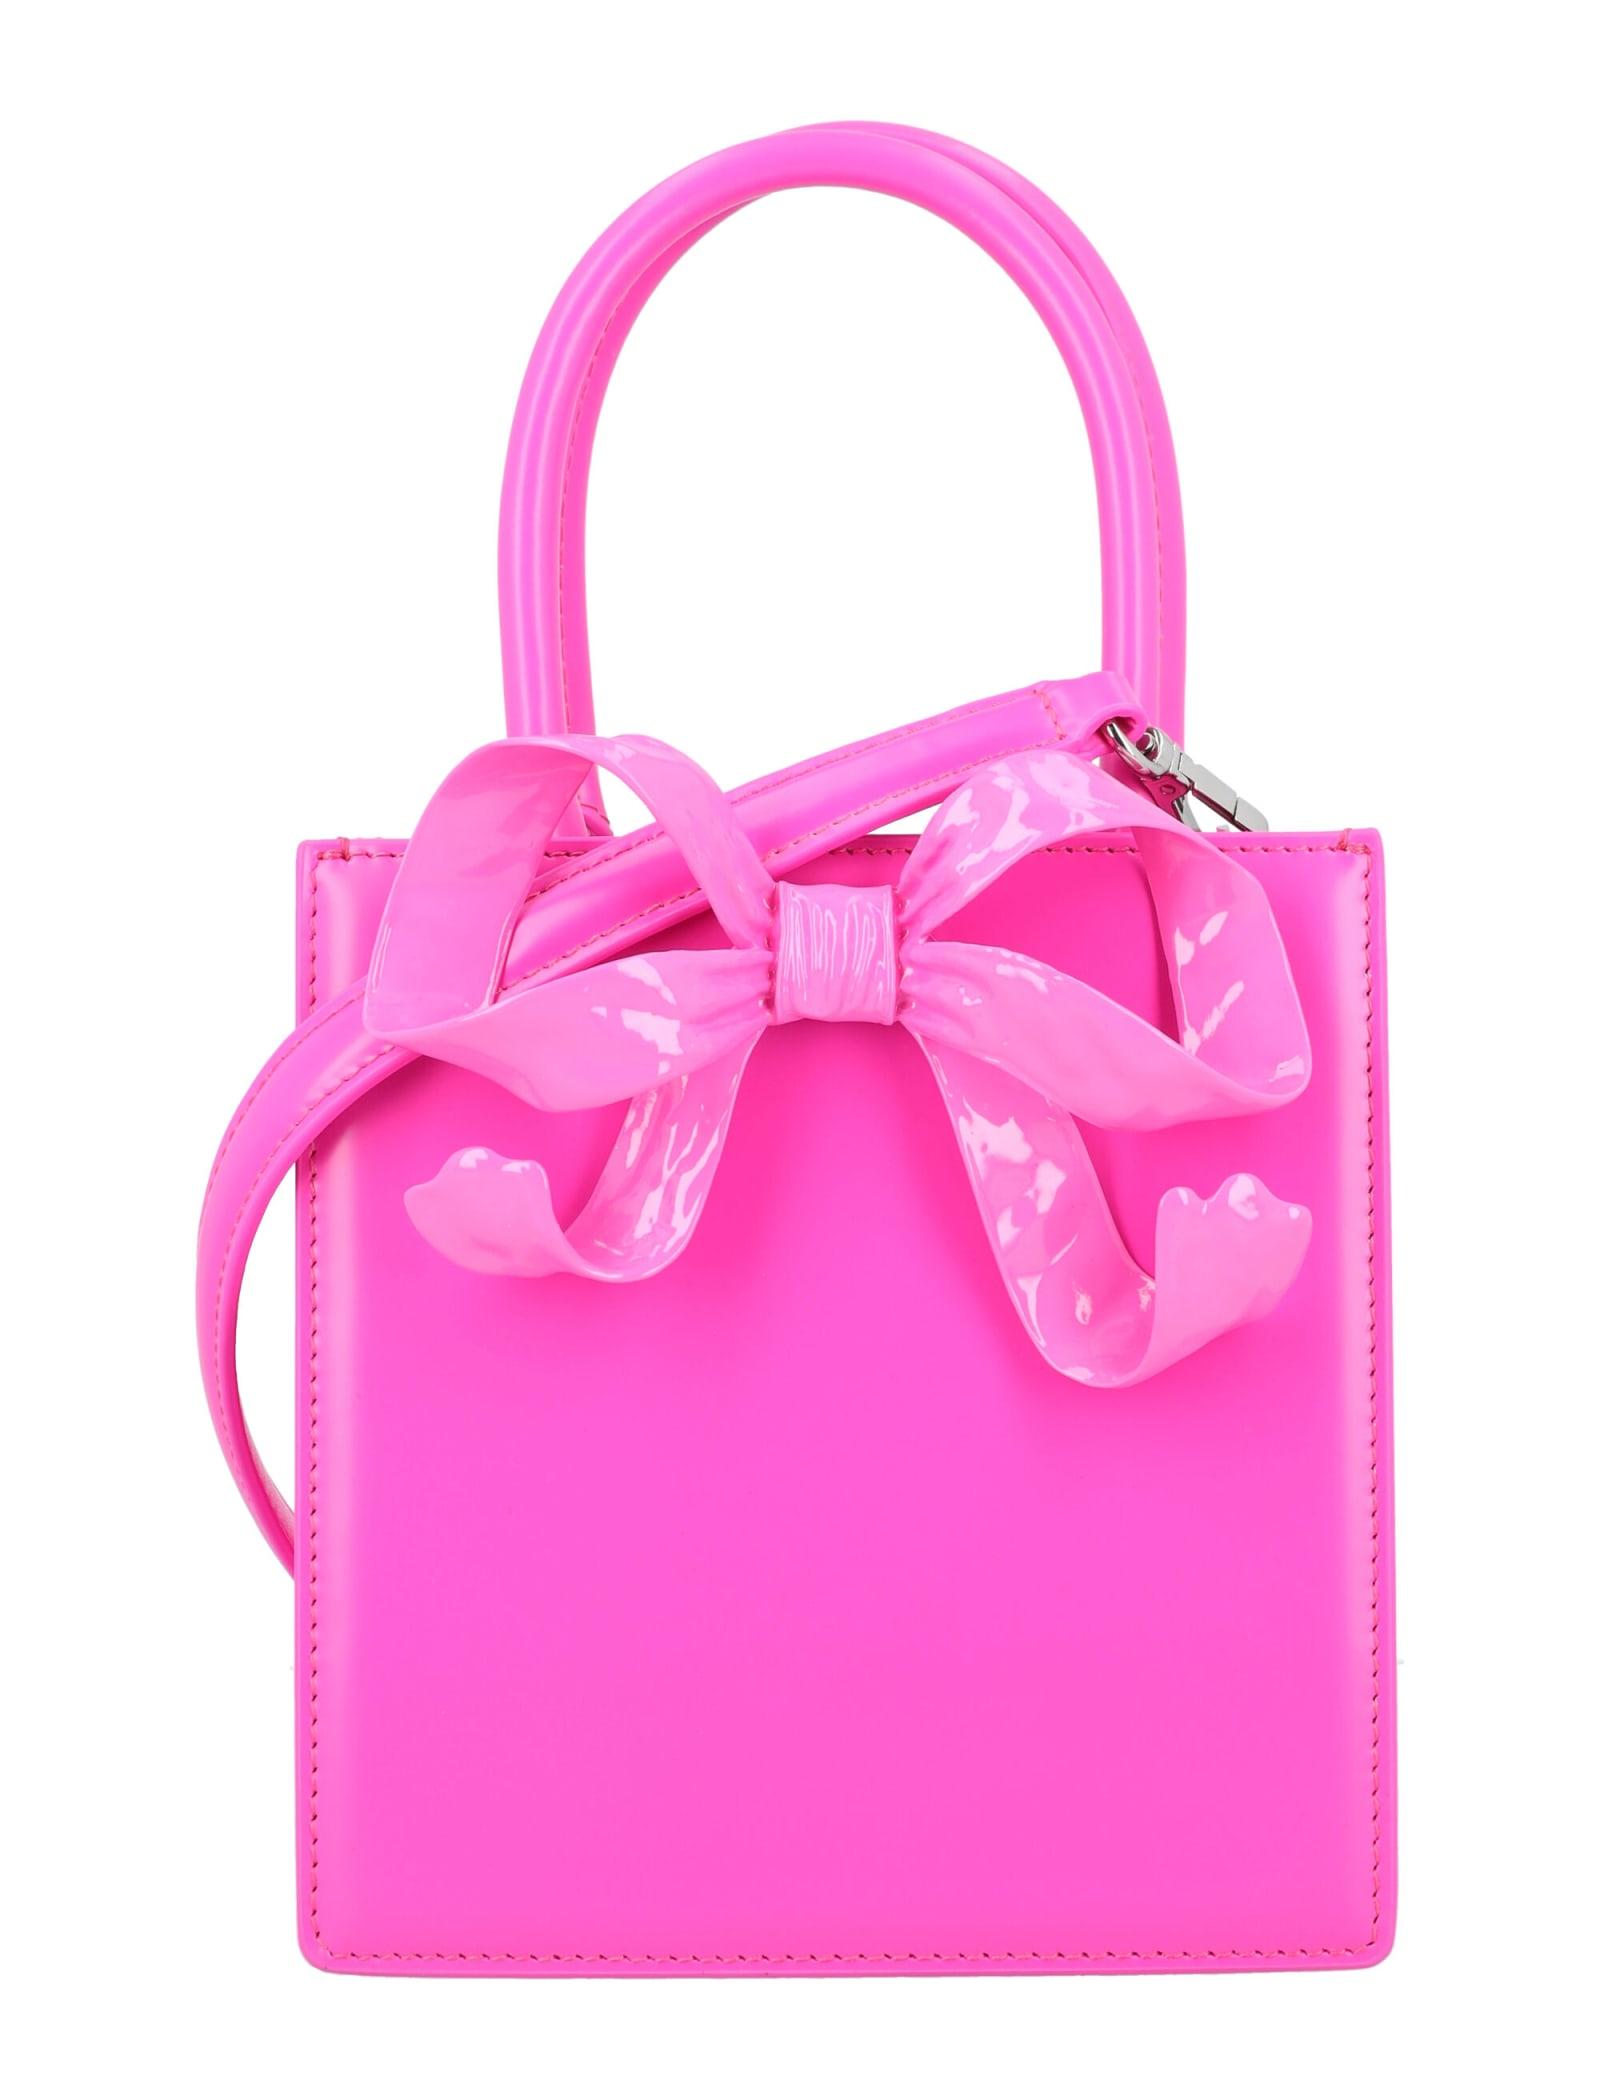 Self-Portrait Bow Mini Tote Bag in Pink | Lyst